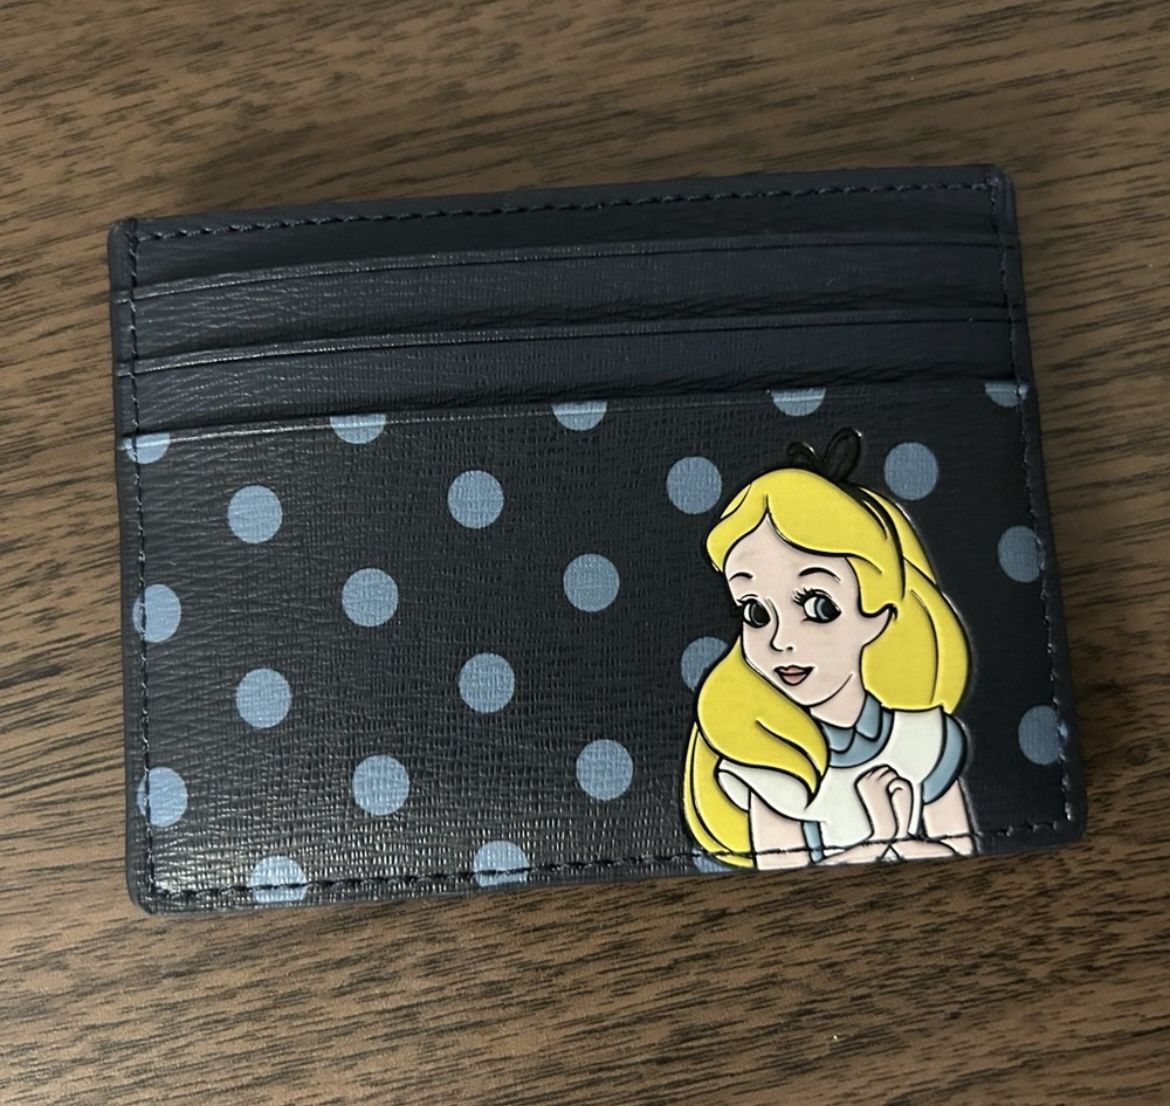 $69 for Kate Spade ♠️ Alice In Wonderland Cardholder